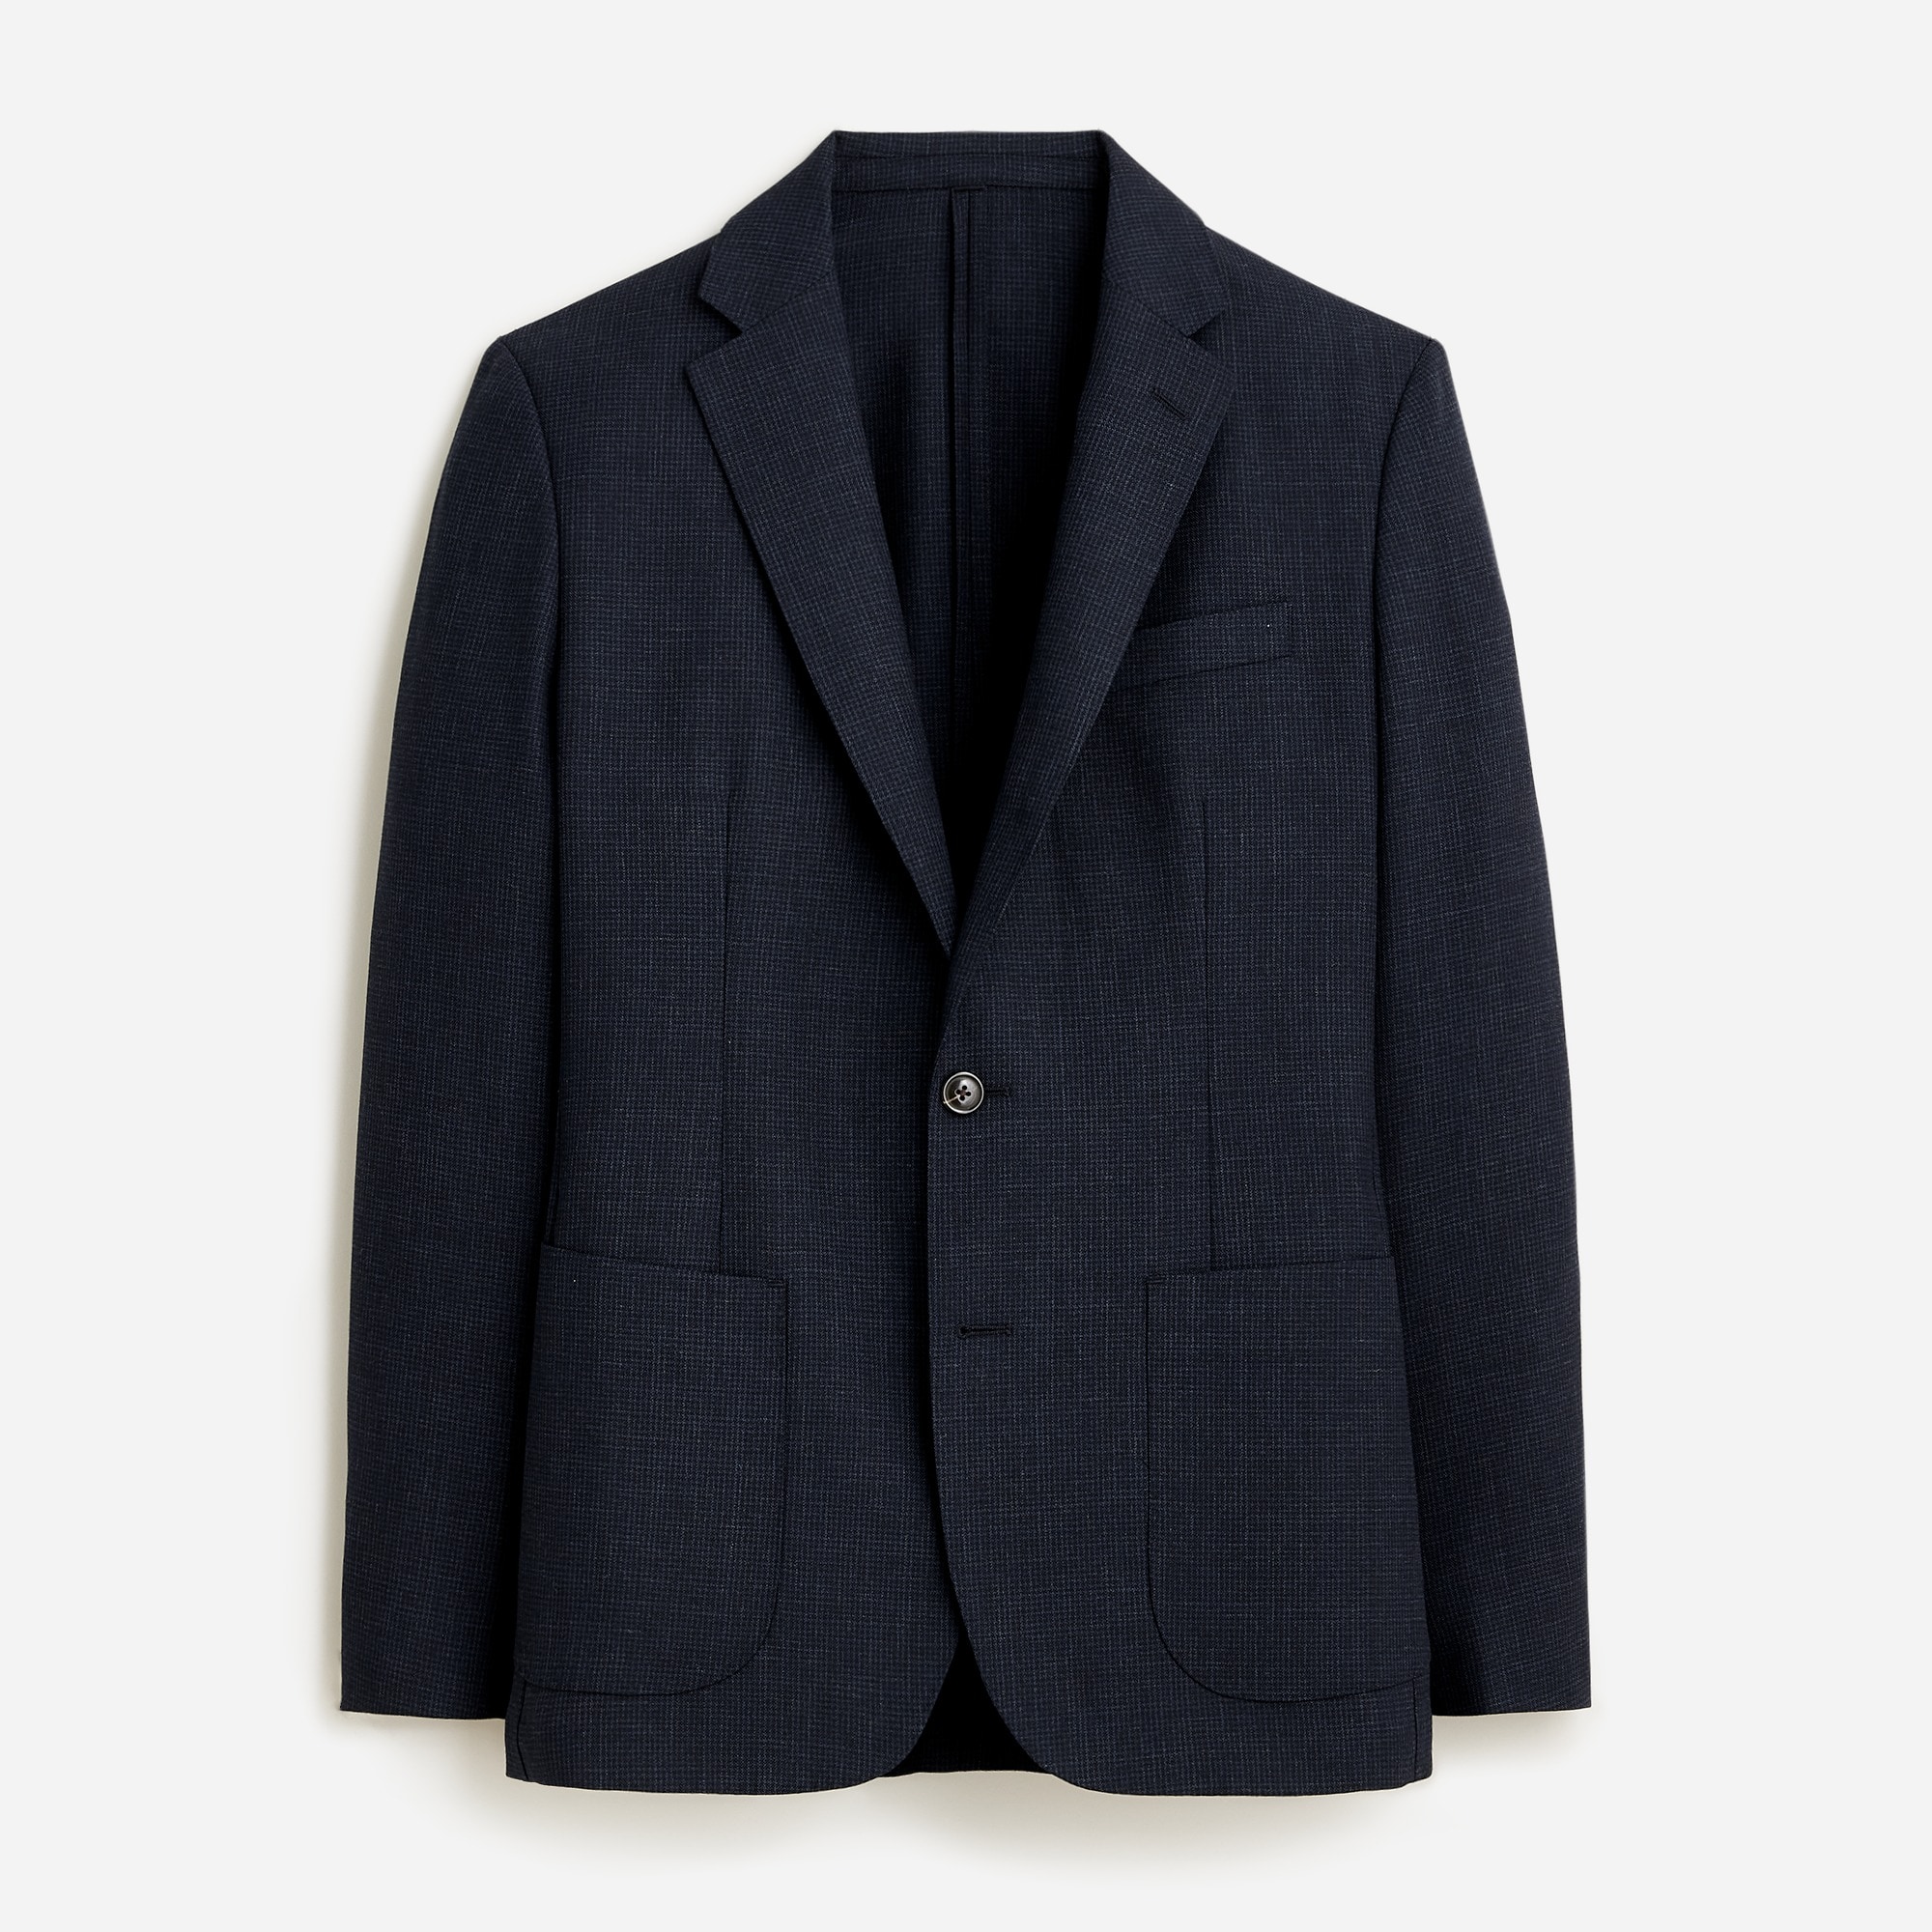  Ludlow Slim-fit suit jacket in English wool